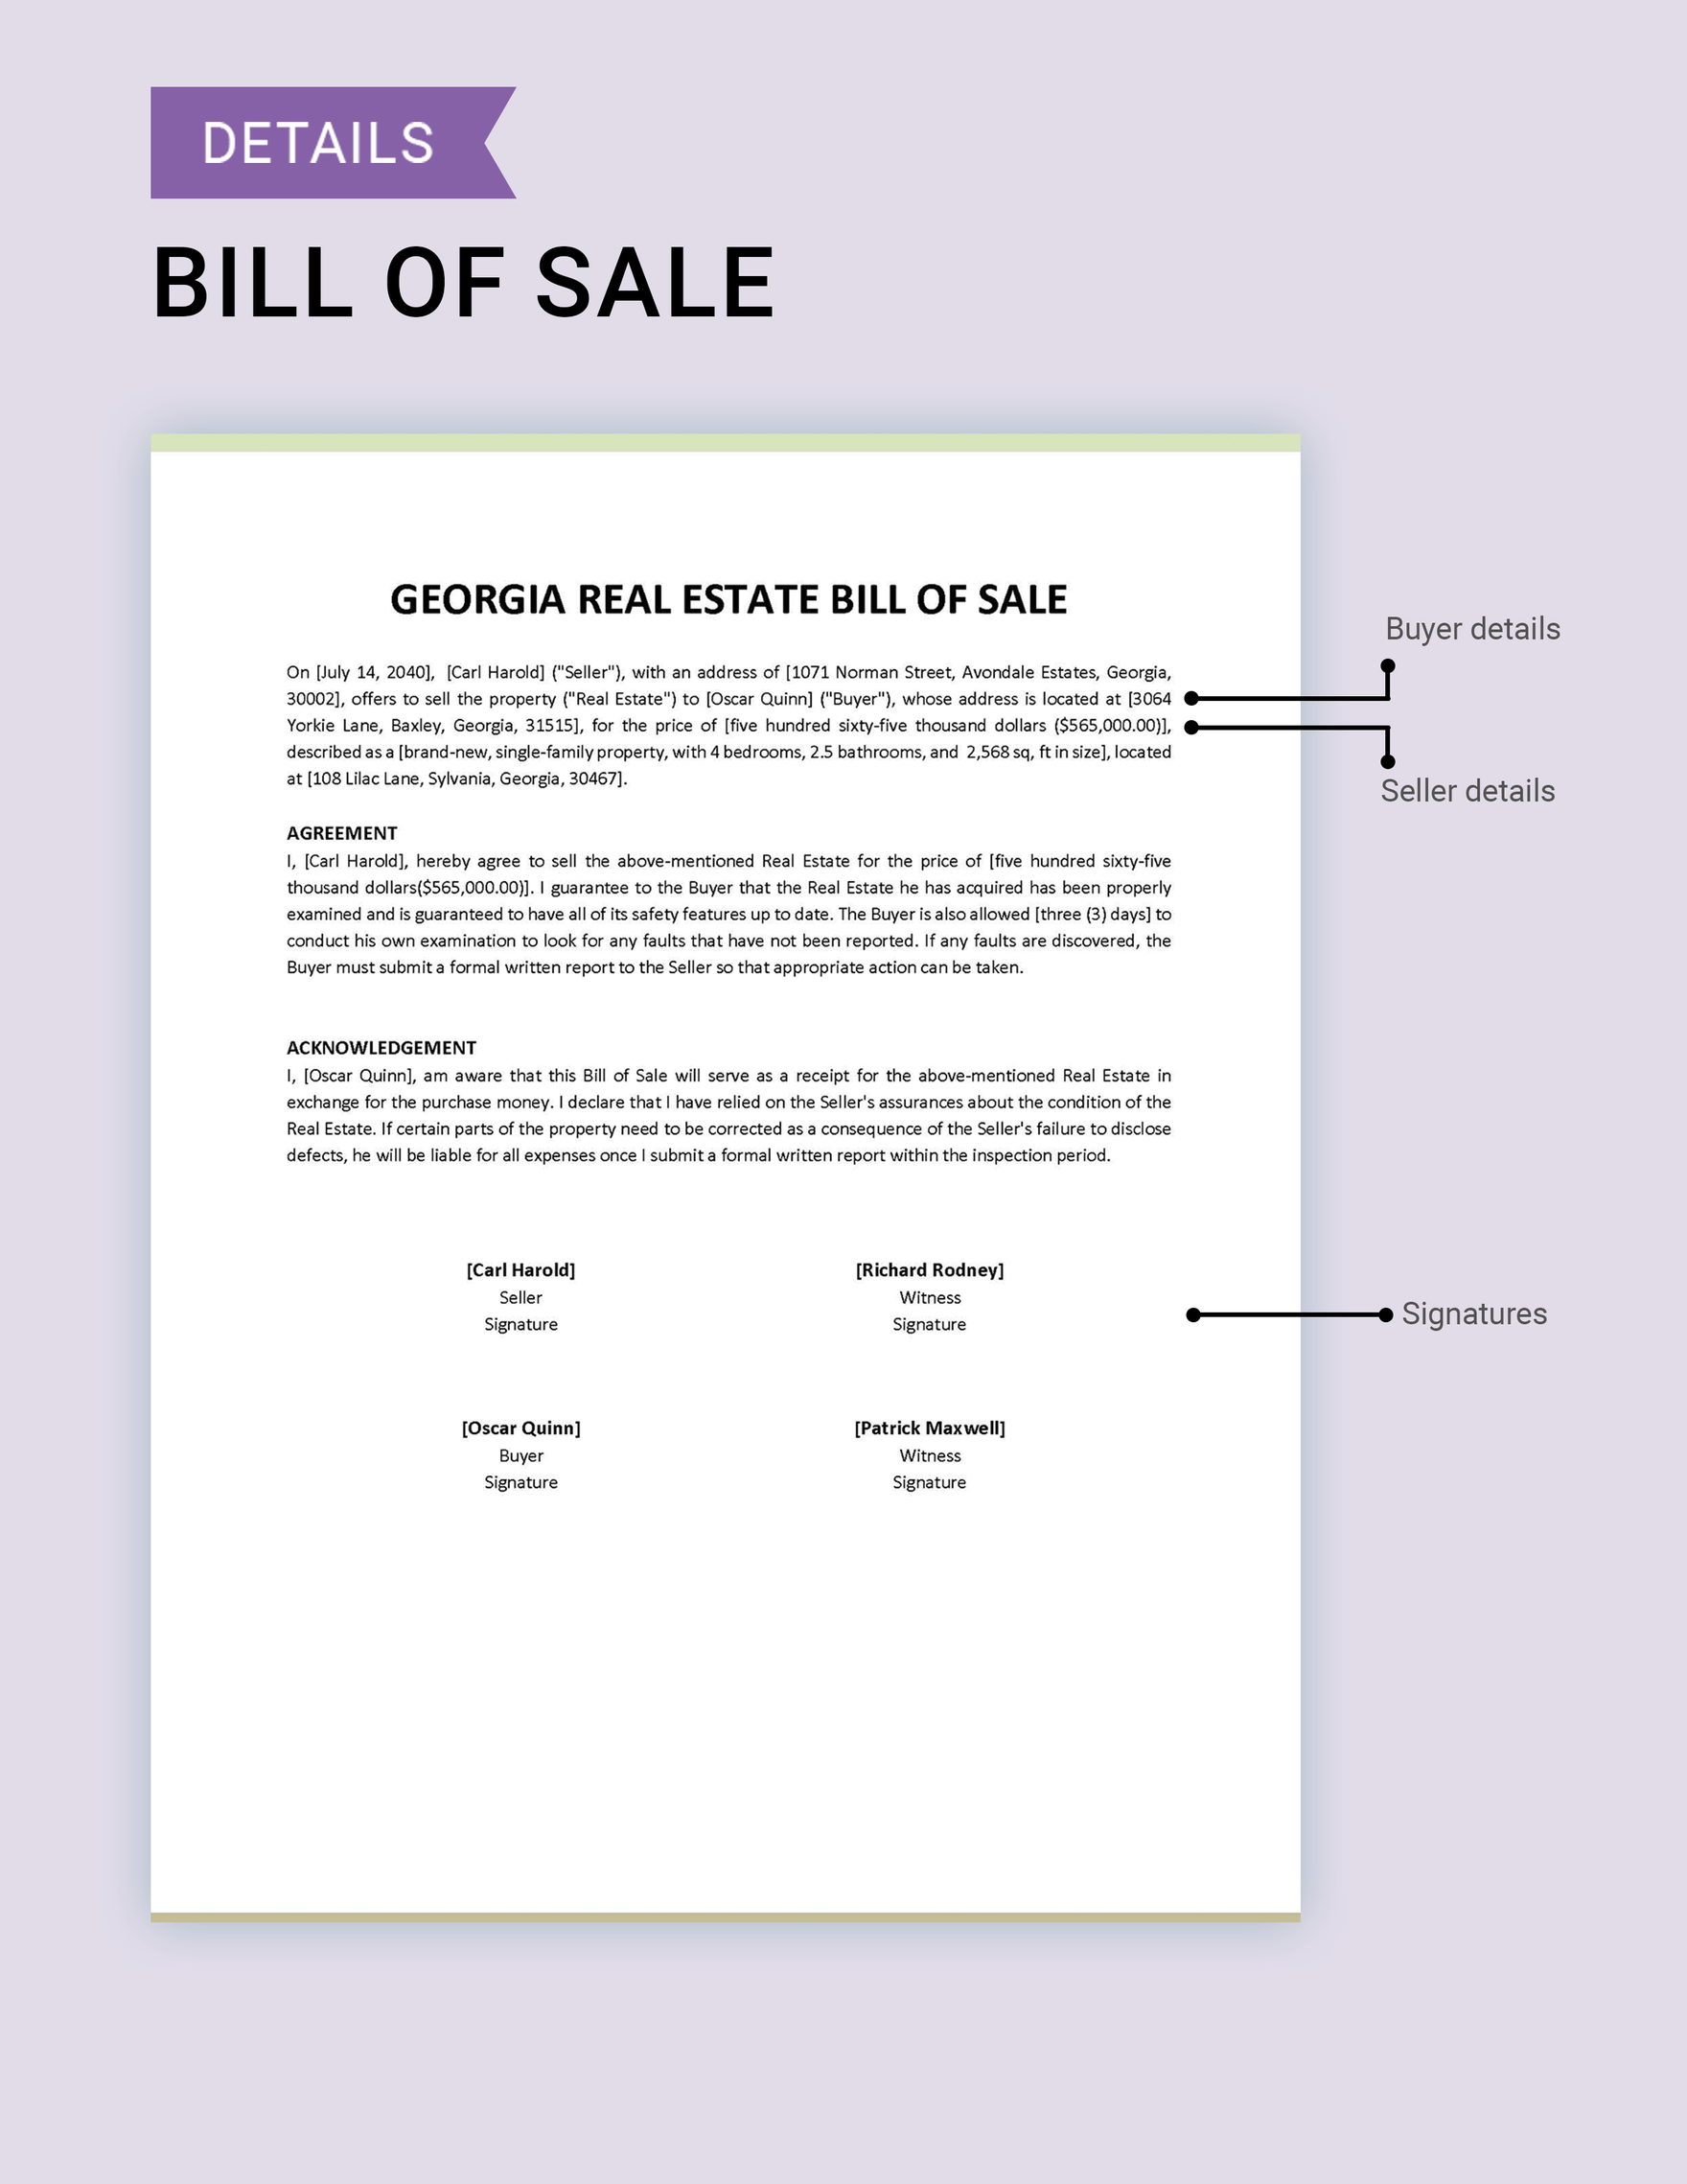 Georgia Real Estate Bill of Sale Template